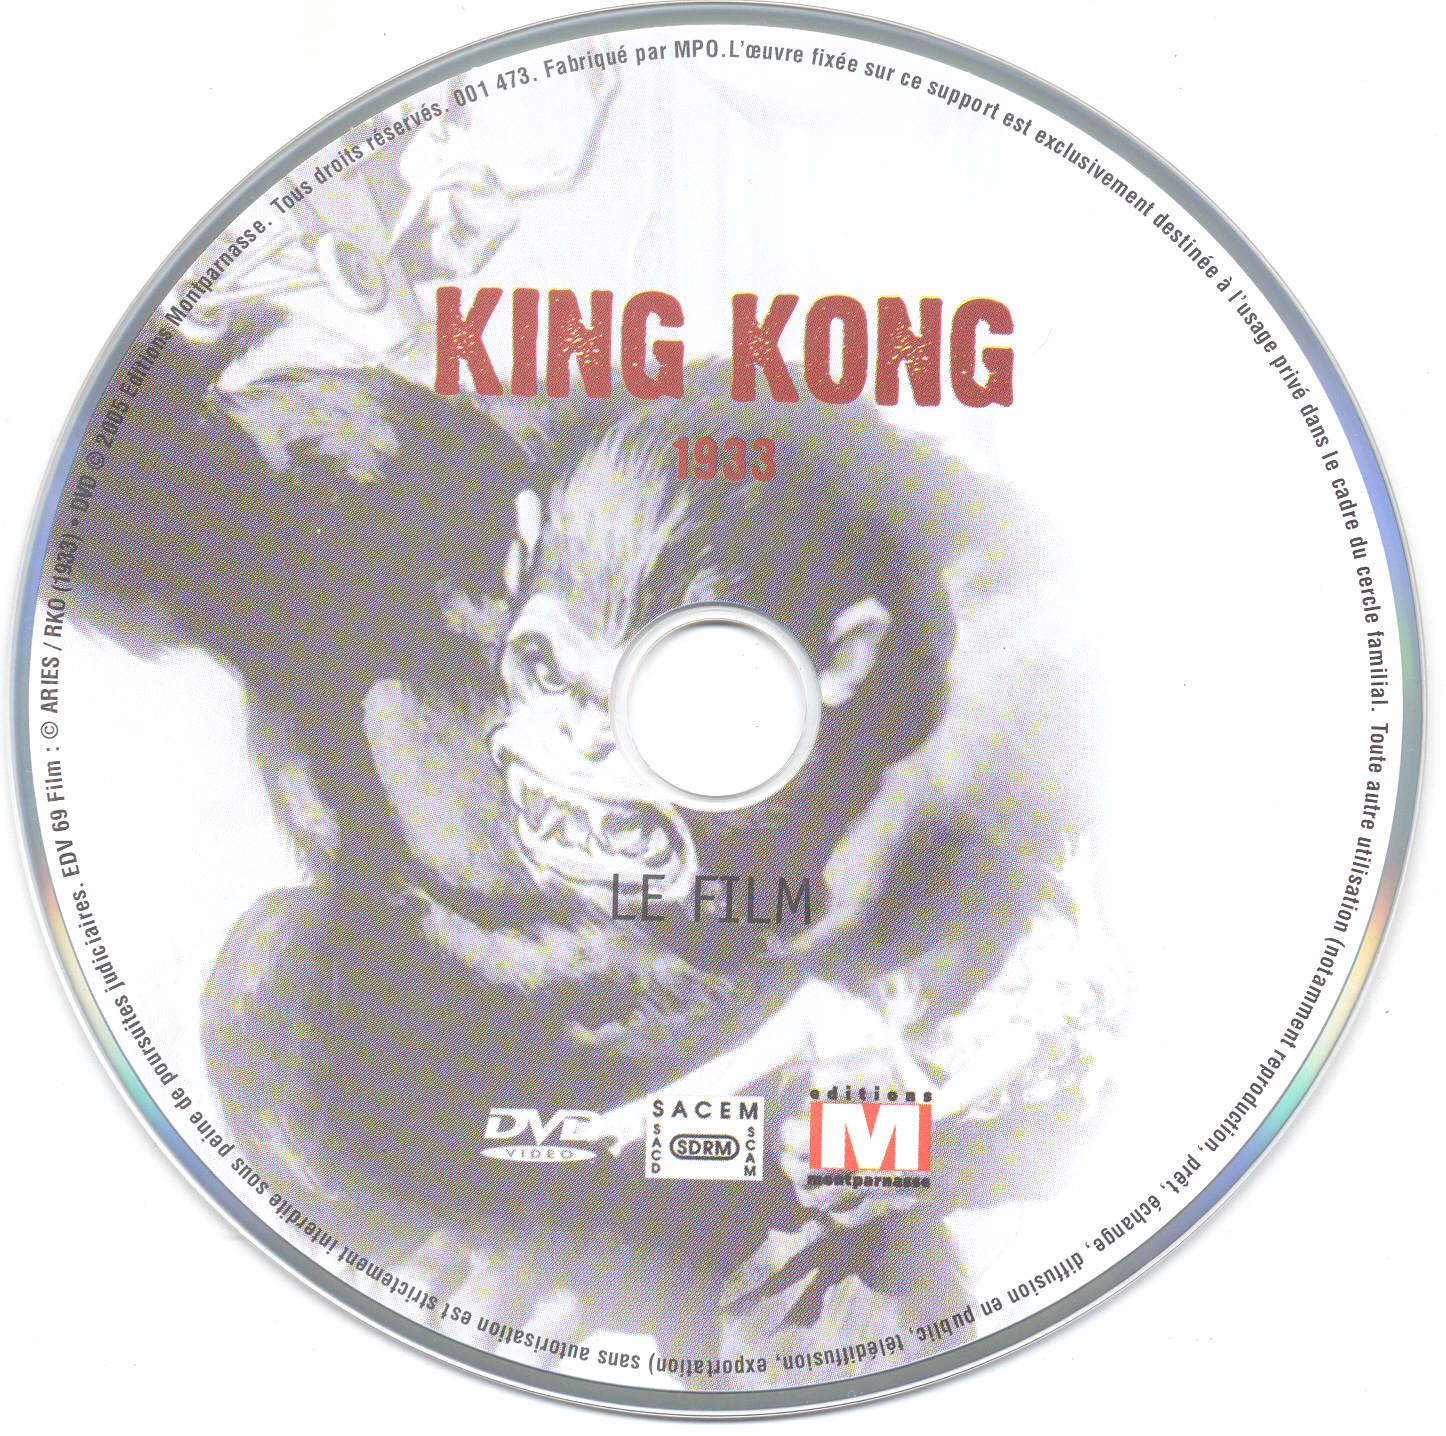 King kong 1933